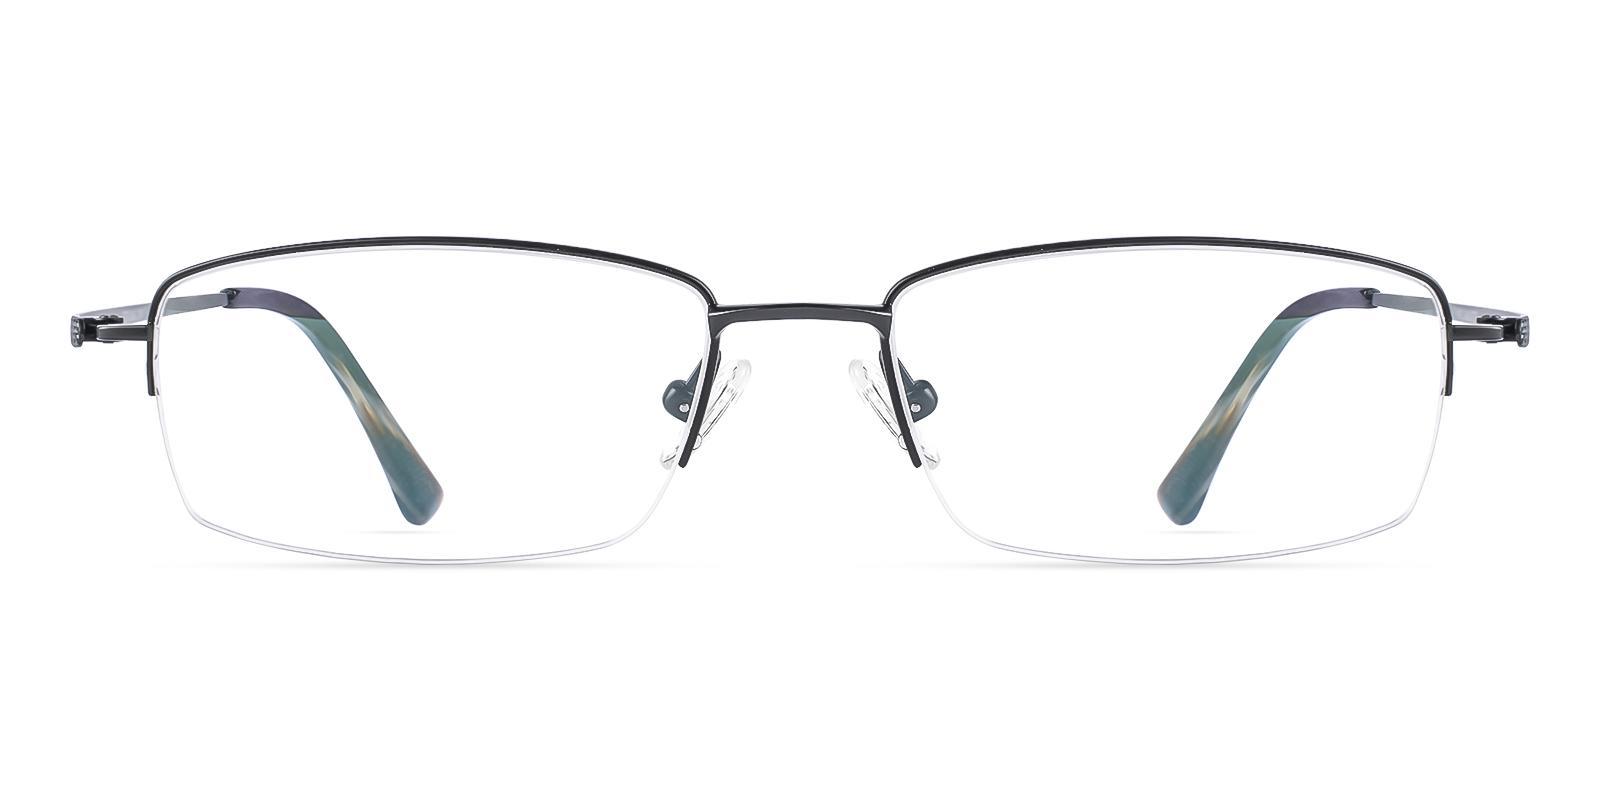 Bateur Black Titanium Eyeglasses , NosePads Frames from ABBE Glasses